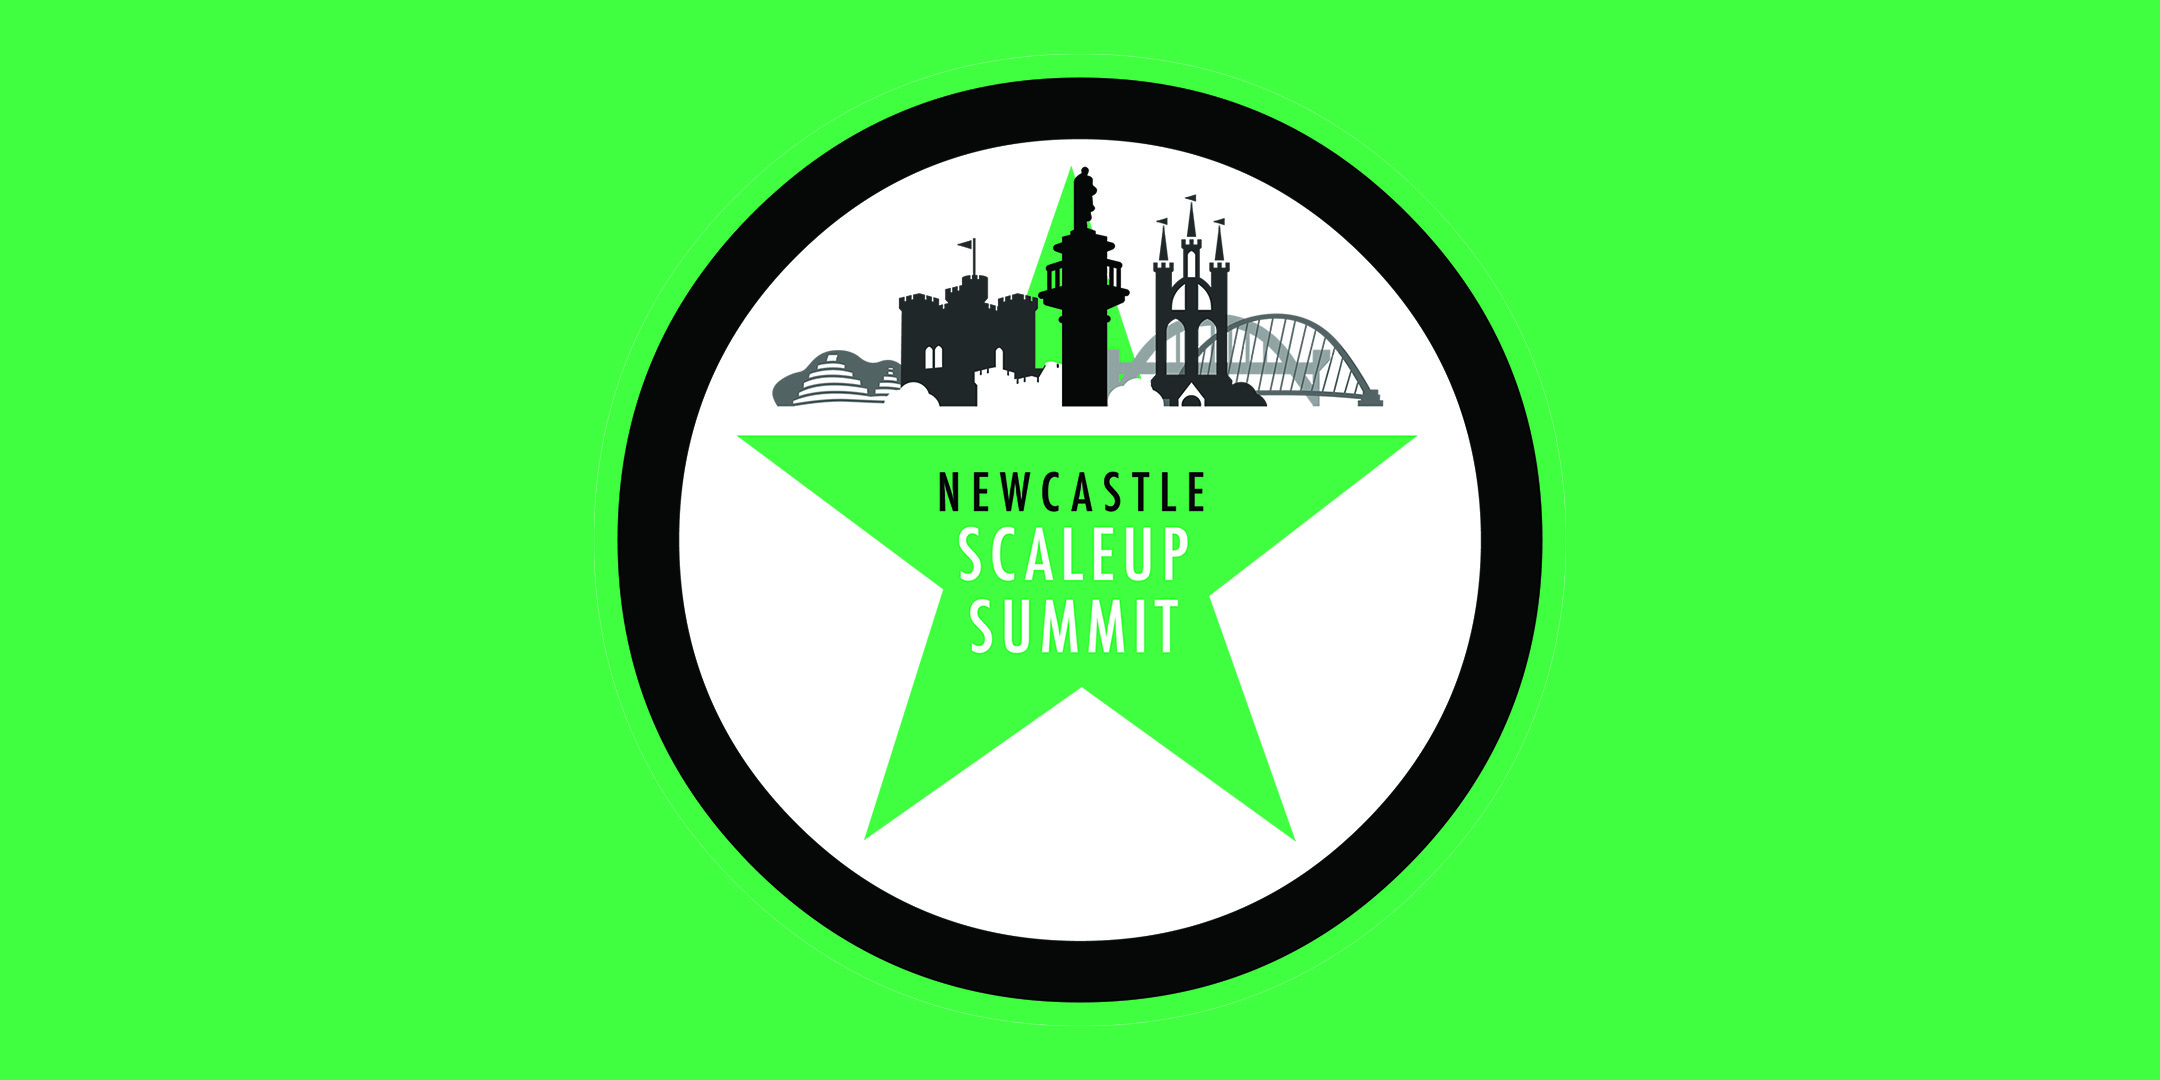 Newcastle Scaleup Summit